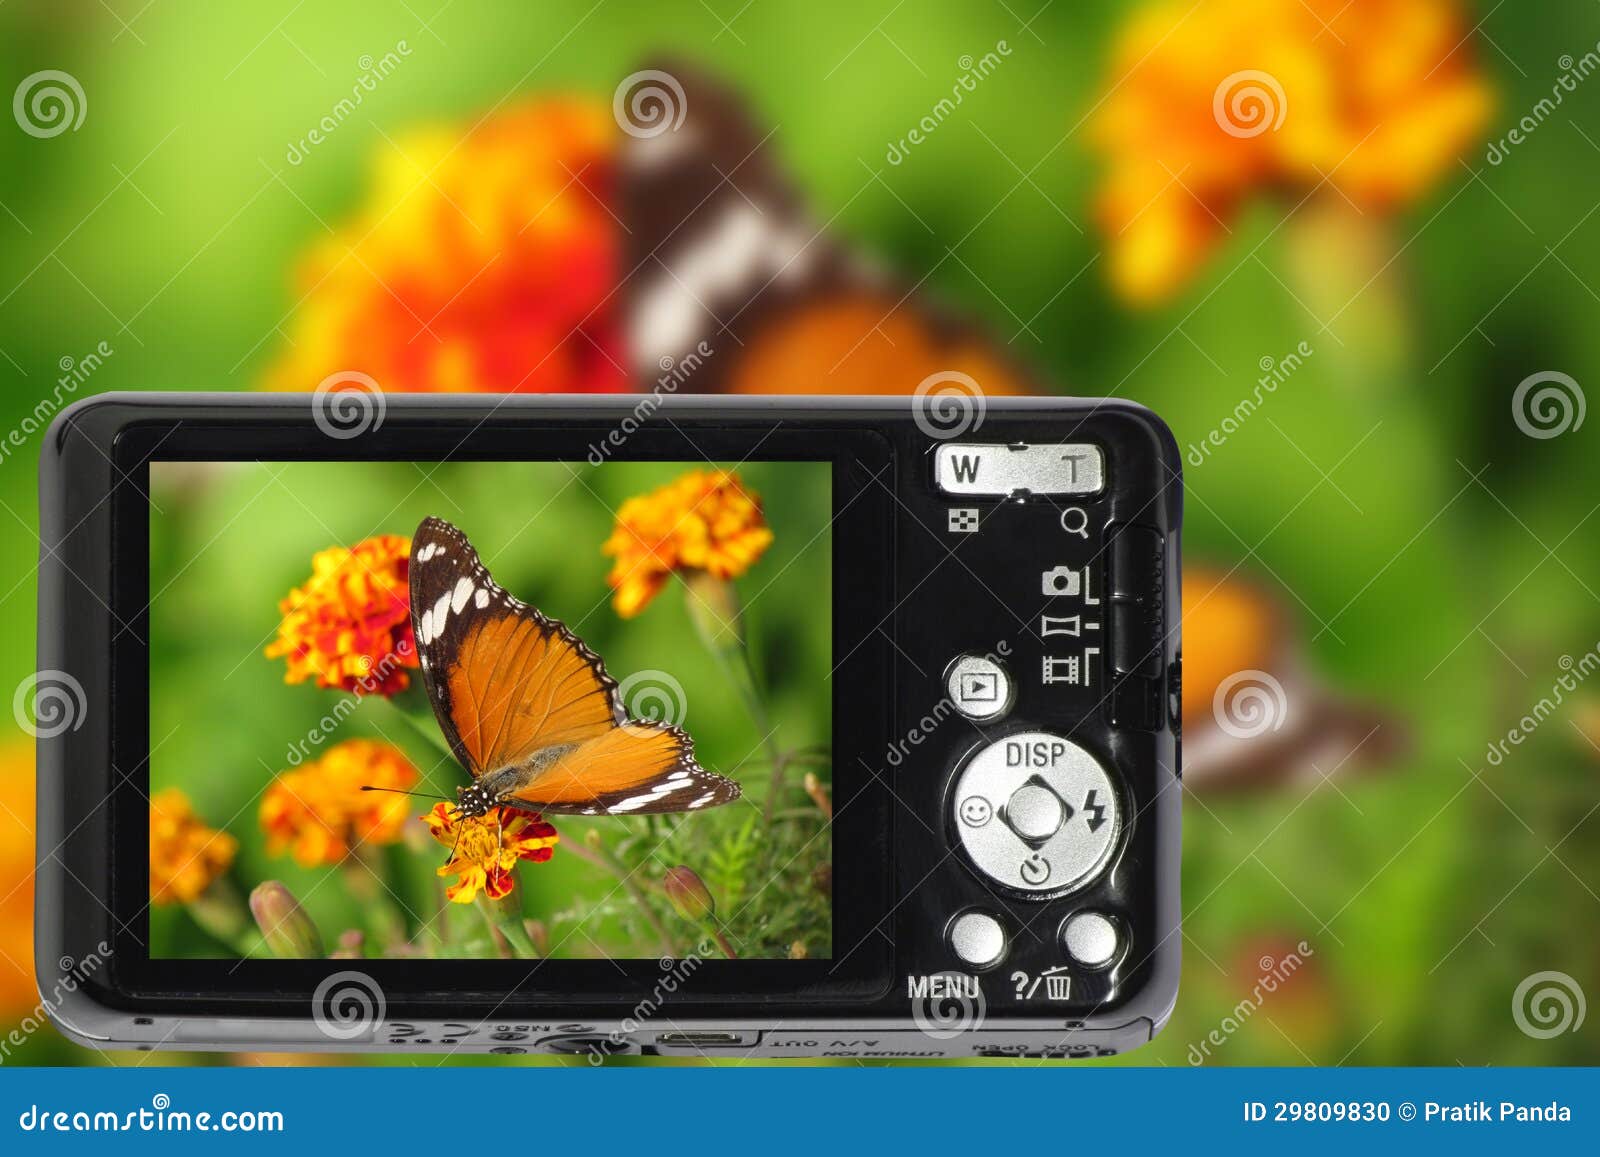 Compact digital camera stock photo. Image of consumer - 29809830